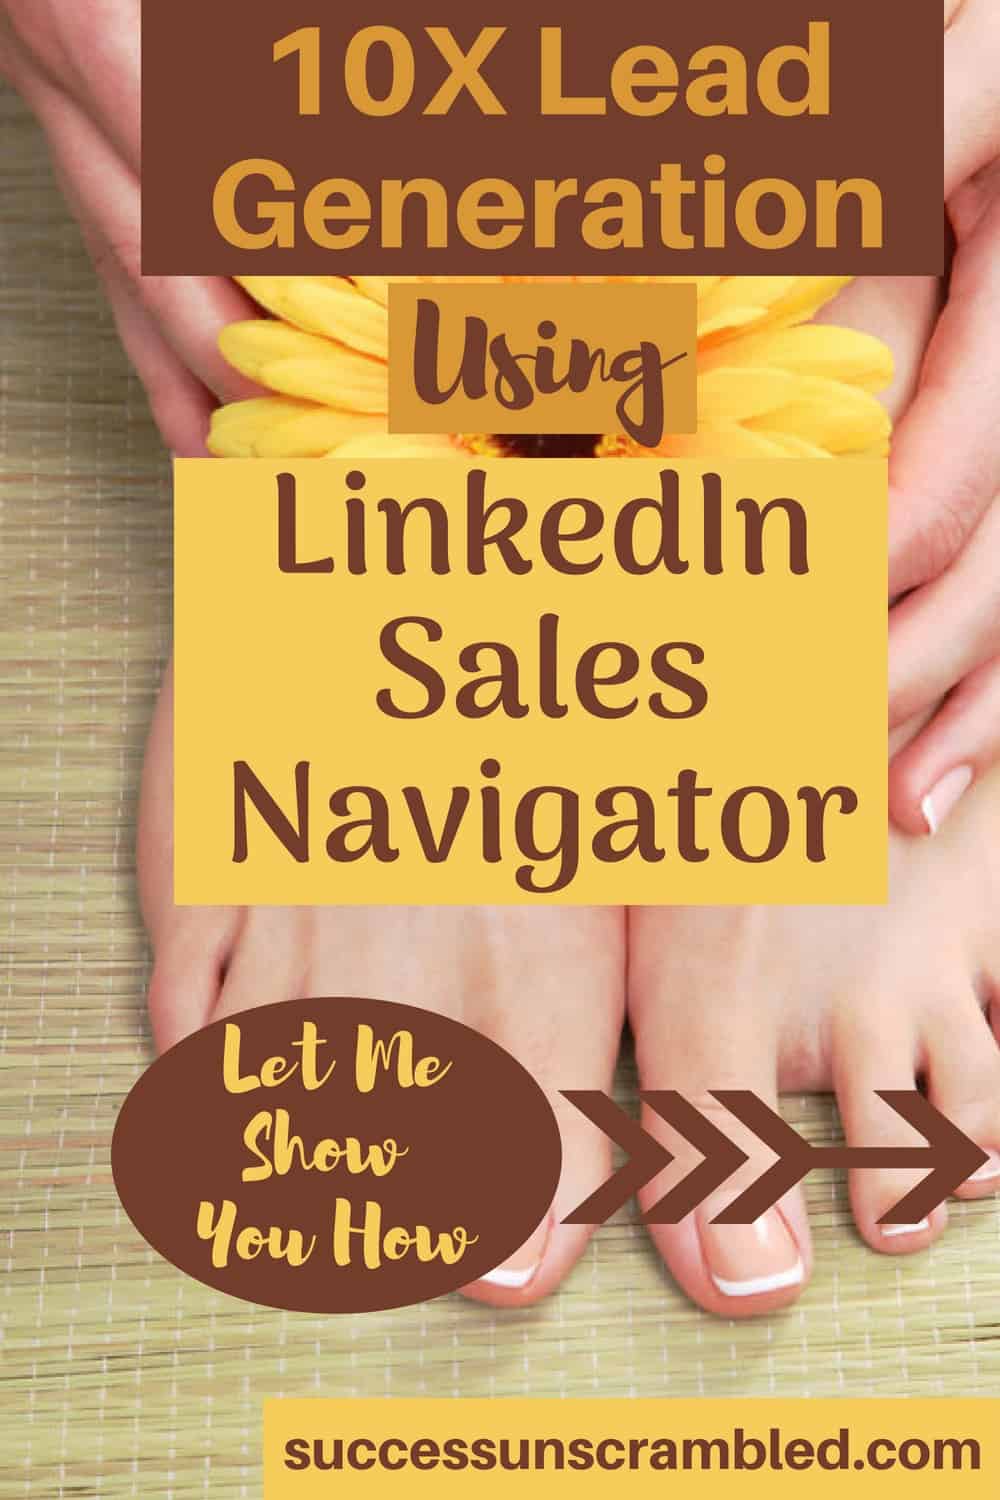 10X Lead Generation Using LinkedIn Sales Navigator